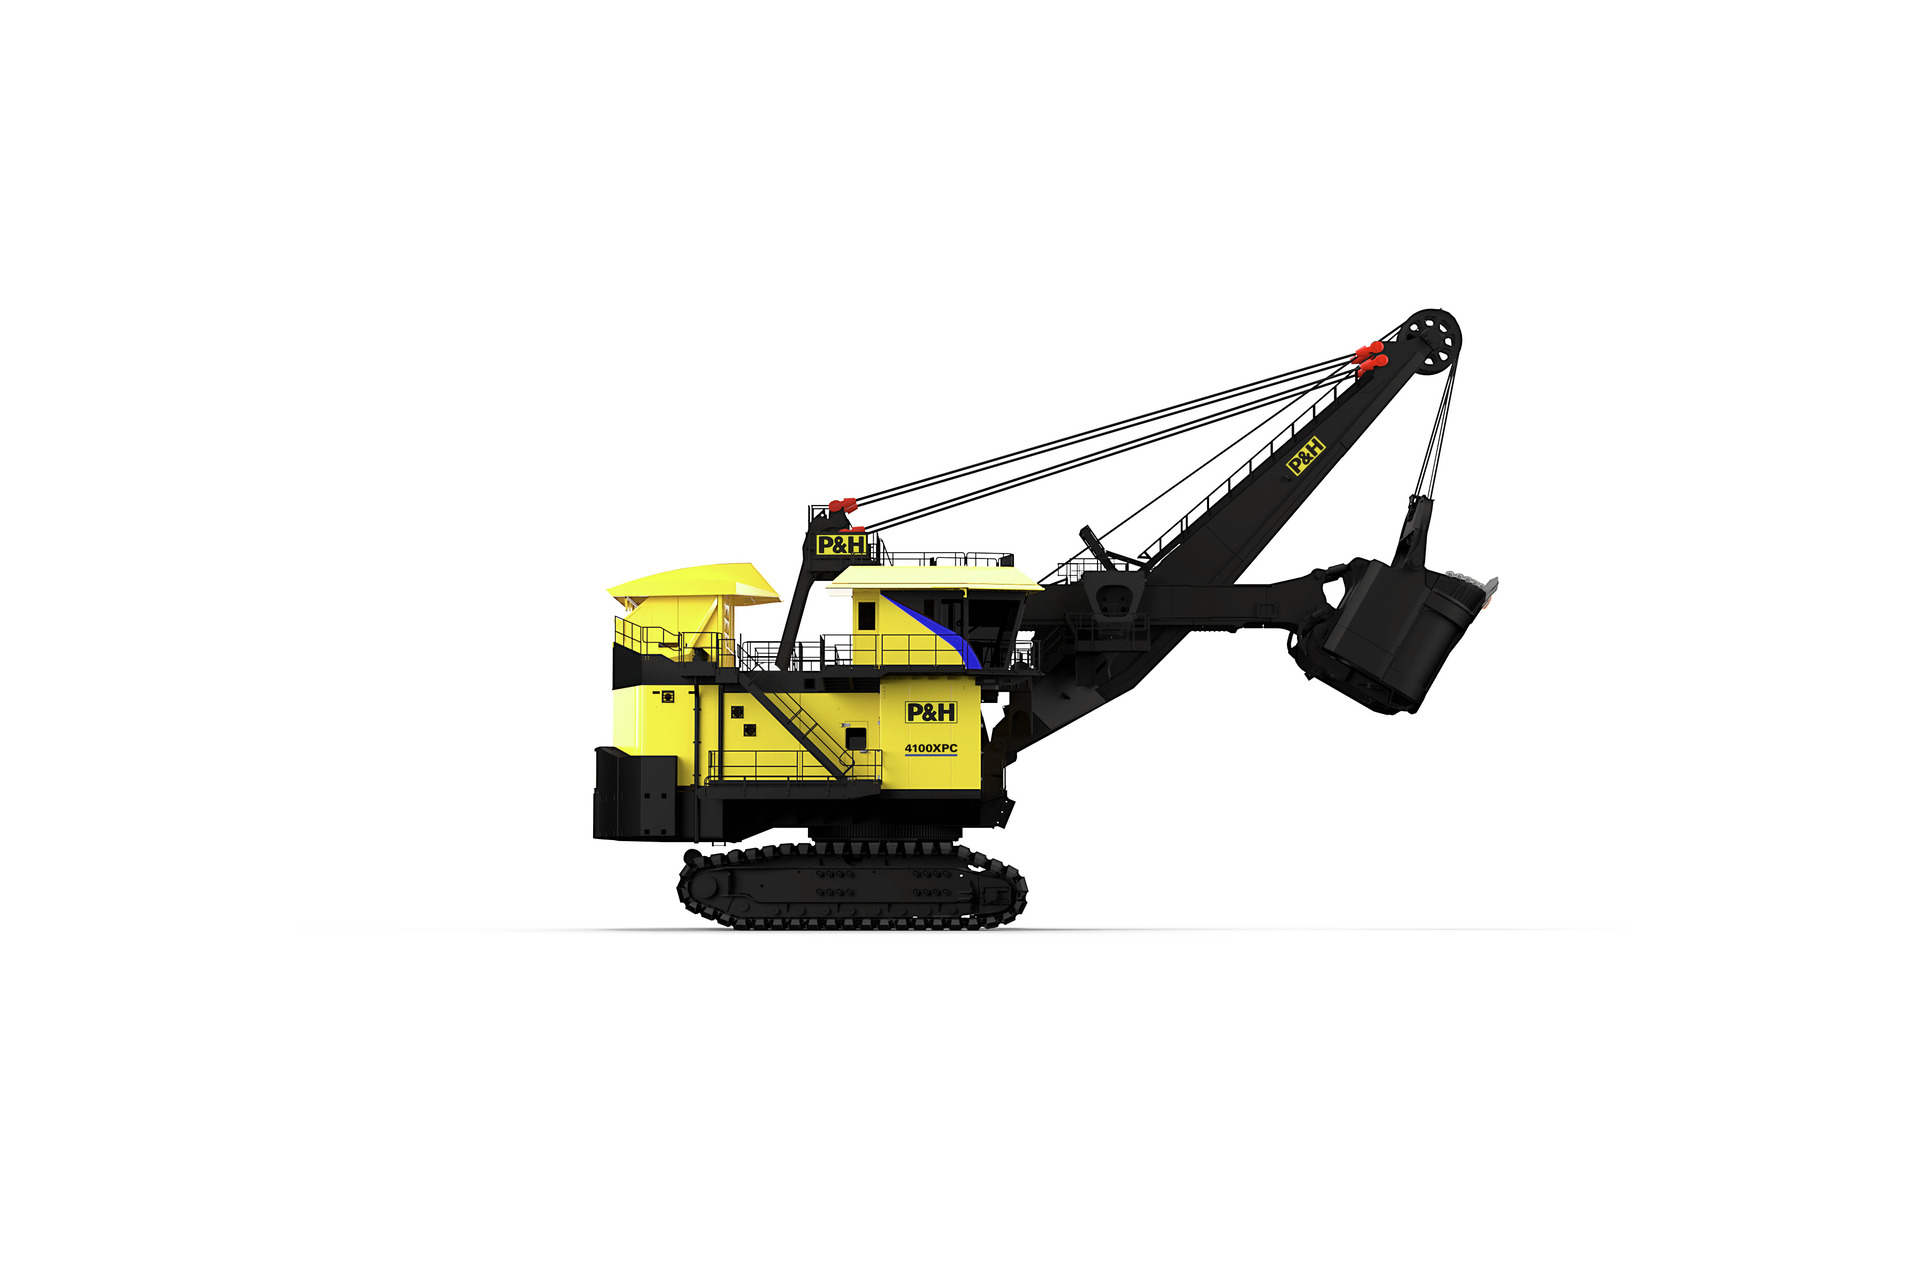 P&H 4100XPC AC mining electric rope shovel | Komatsu